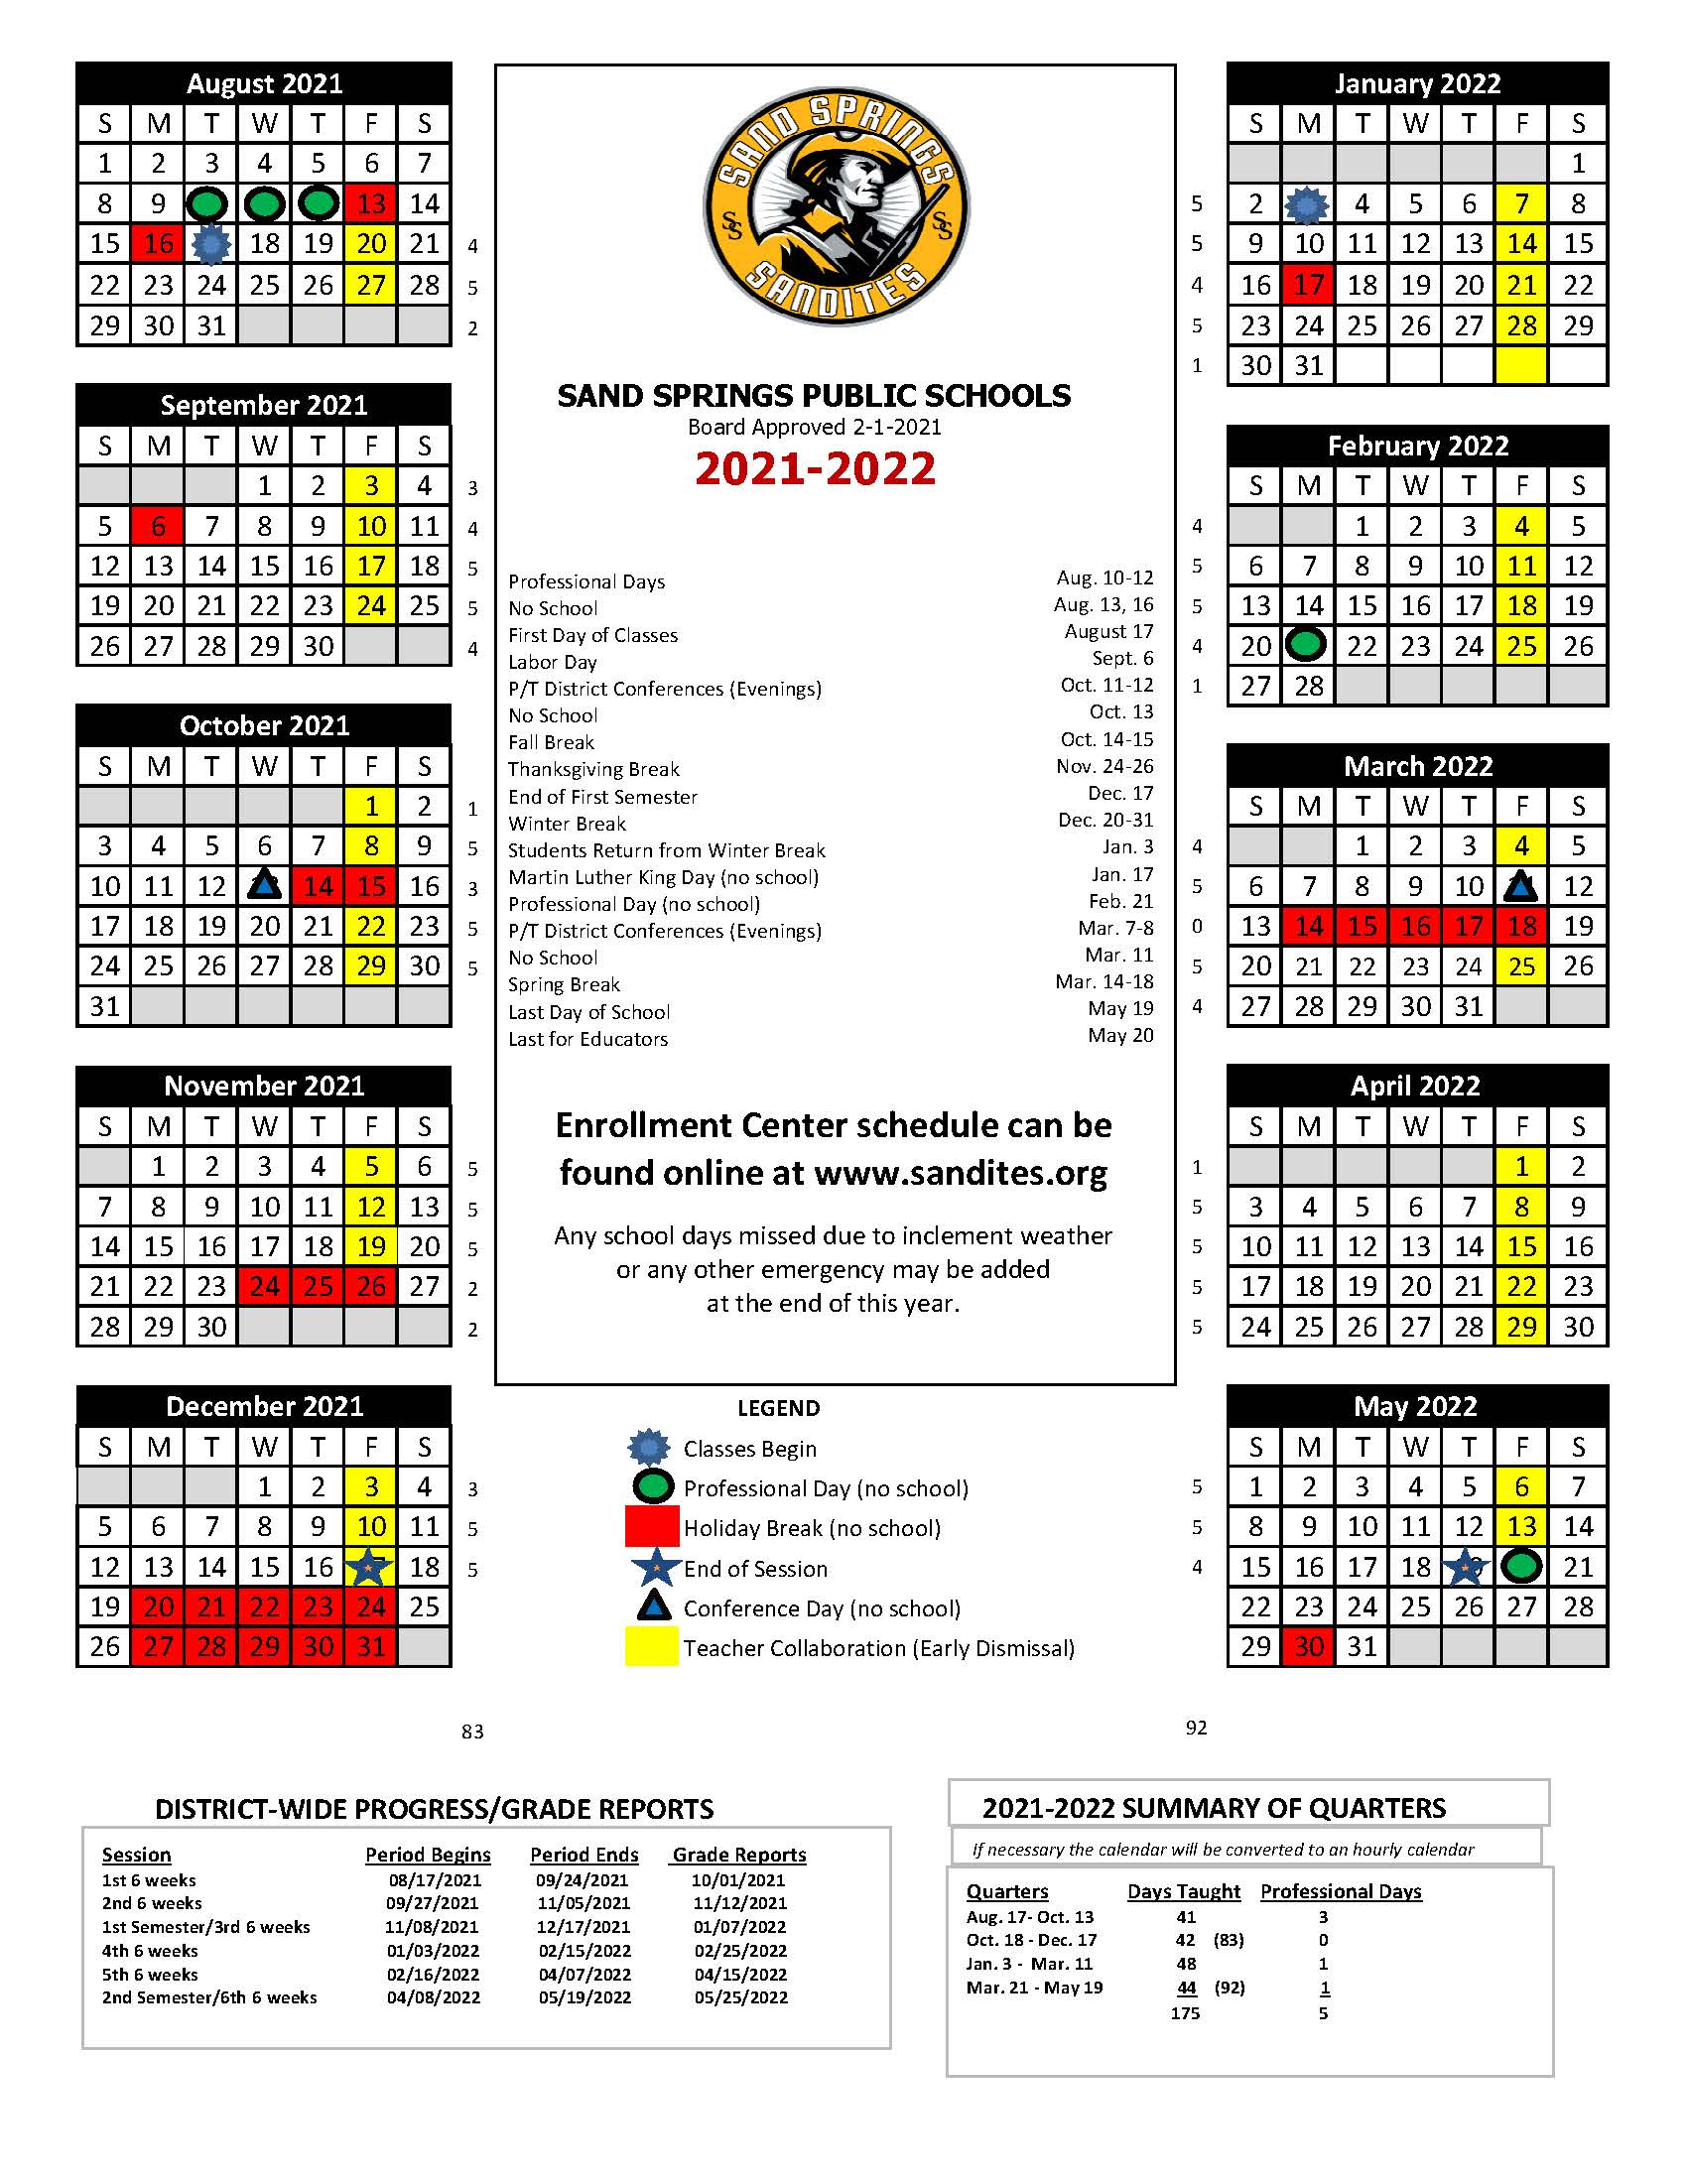 Approved School Calendars Sand Springs Public Schools